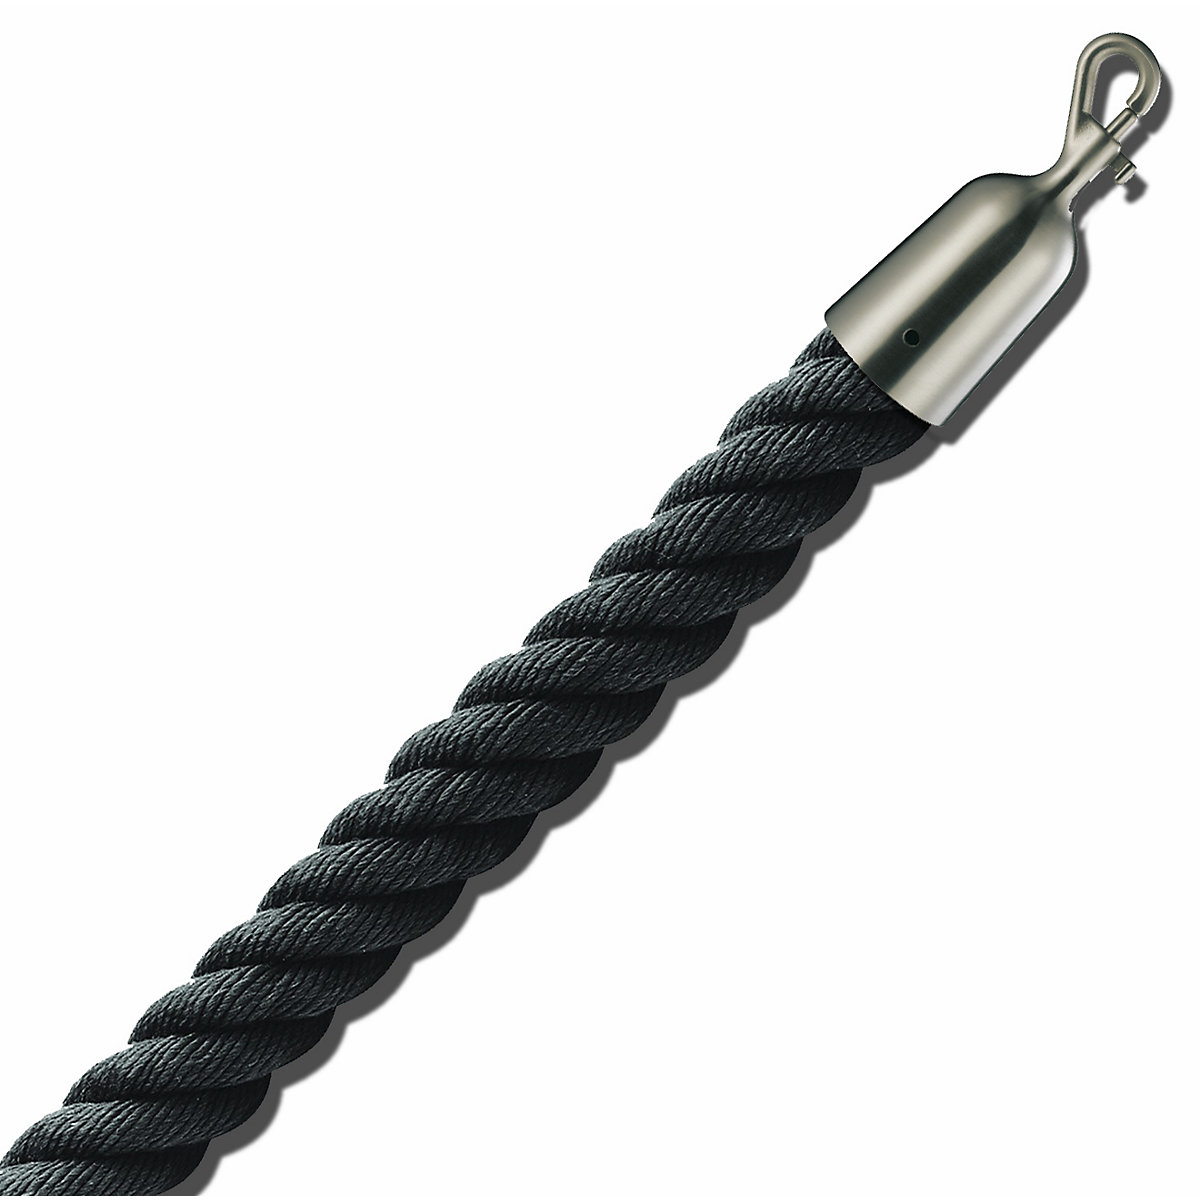 Barrier cord 1.5 m, matt nickel end caps, black cord-4